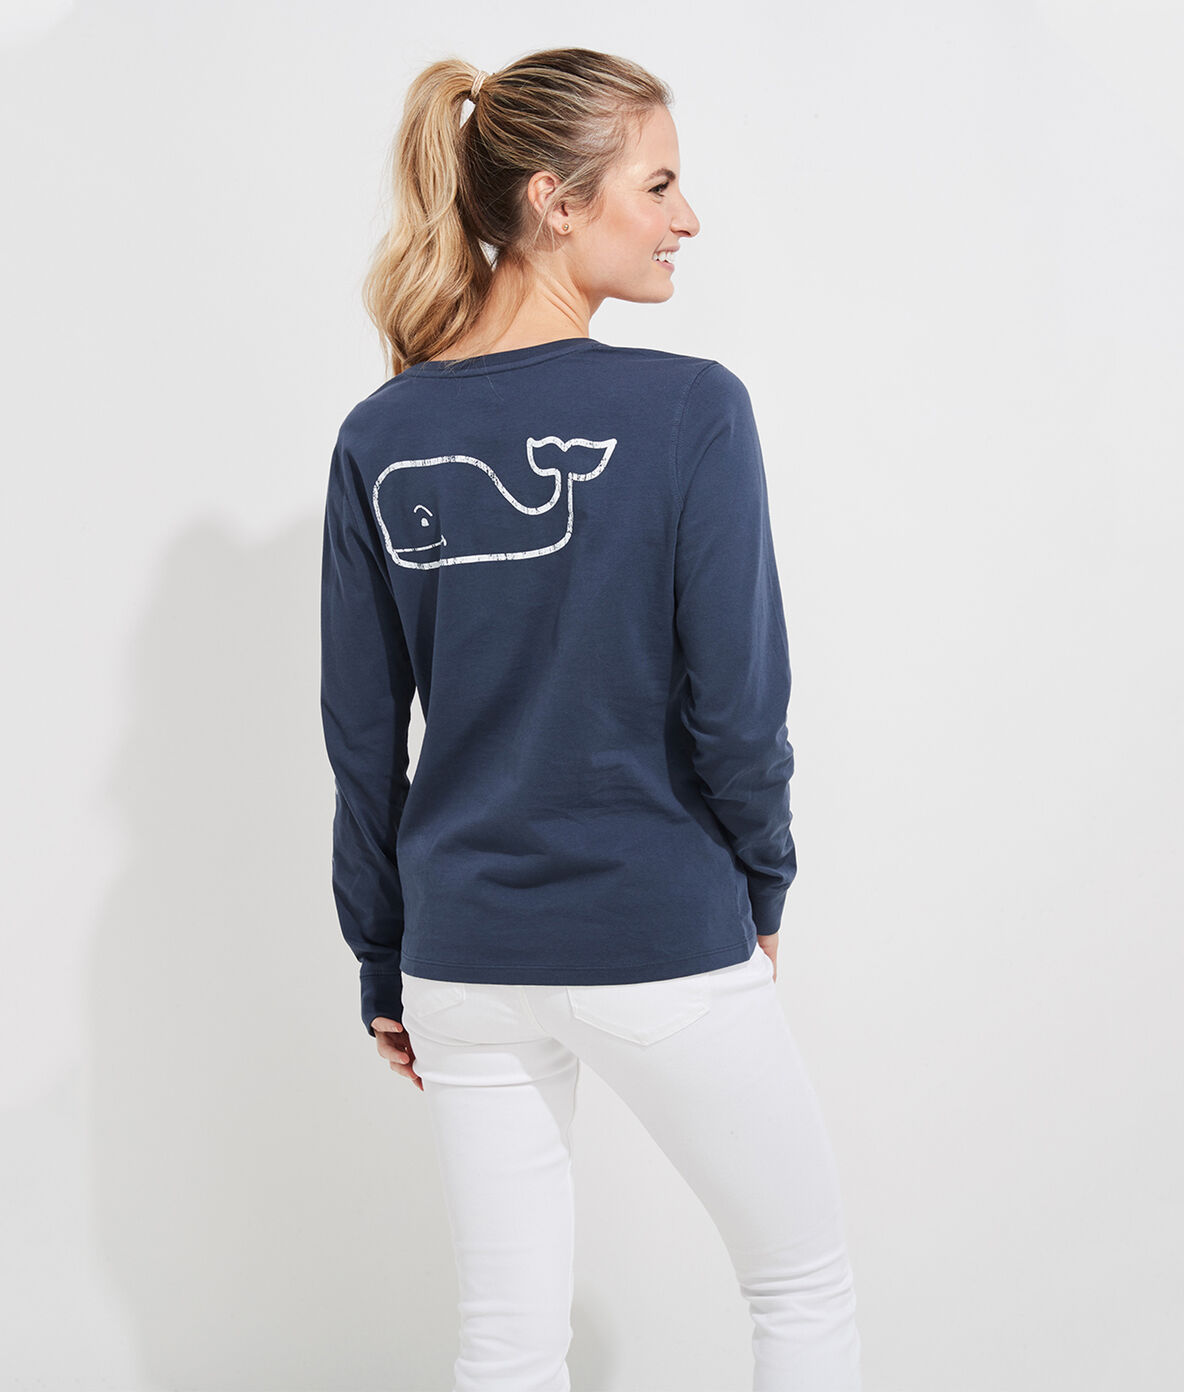 Adult Medium Vineyard Vines Long Sleeve Grey T-shirt Whale & Front Pocket NWT